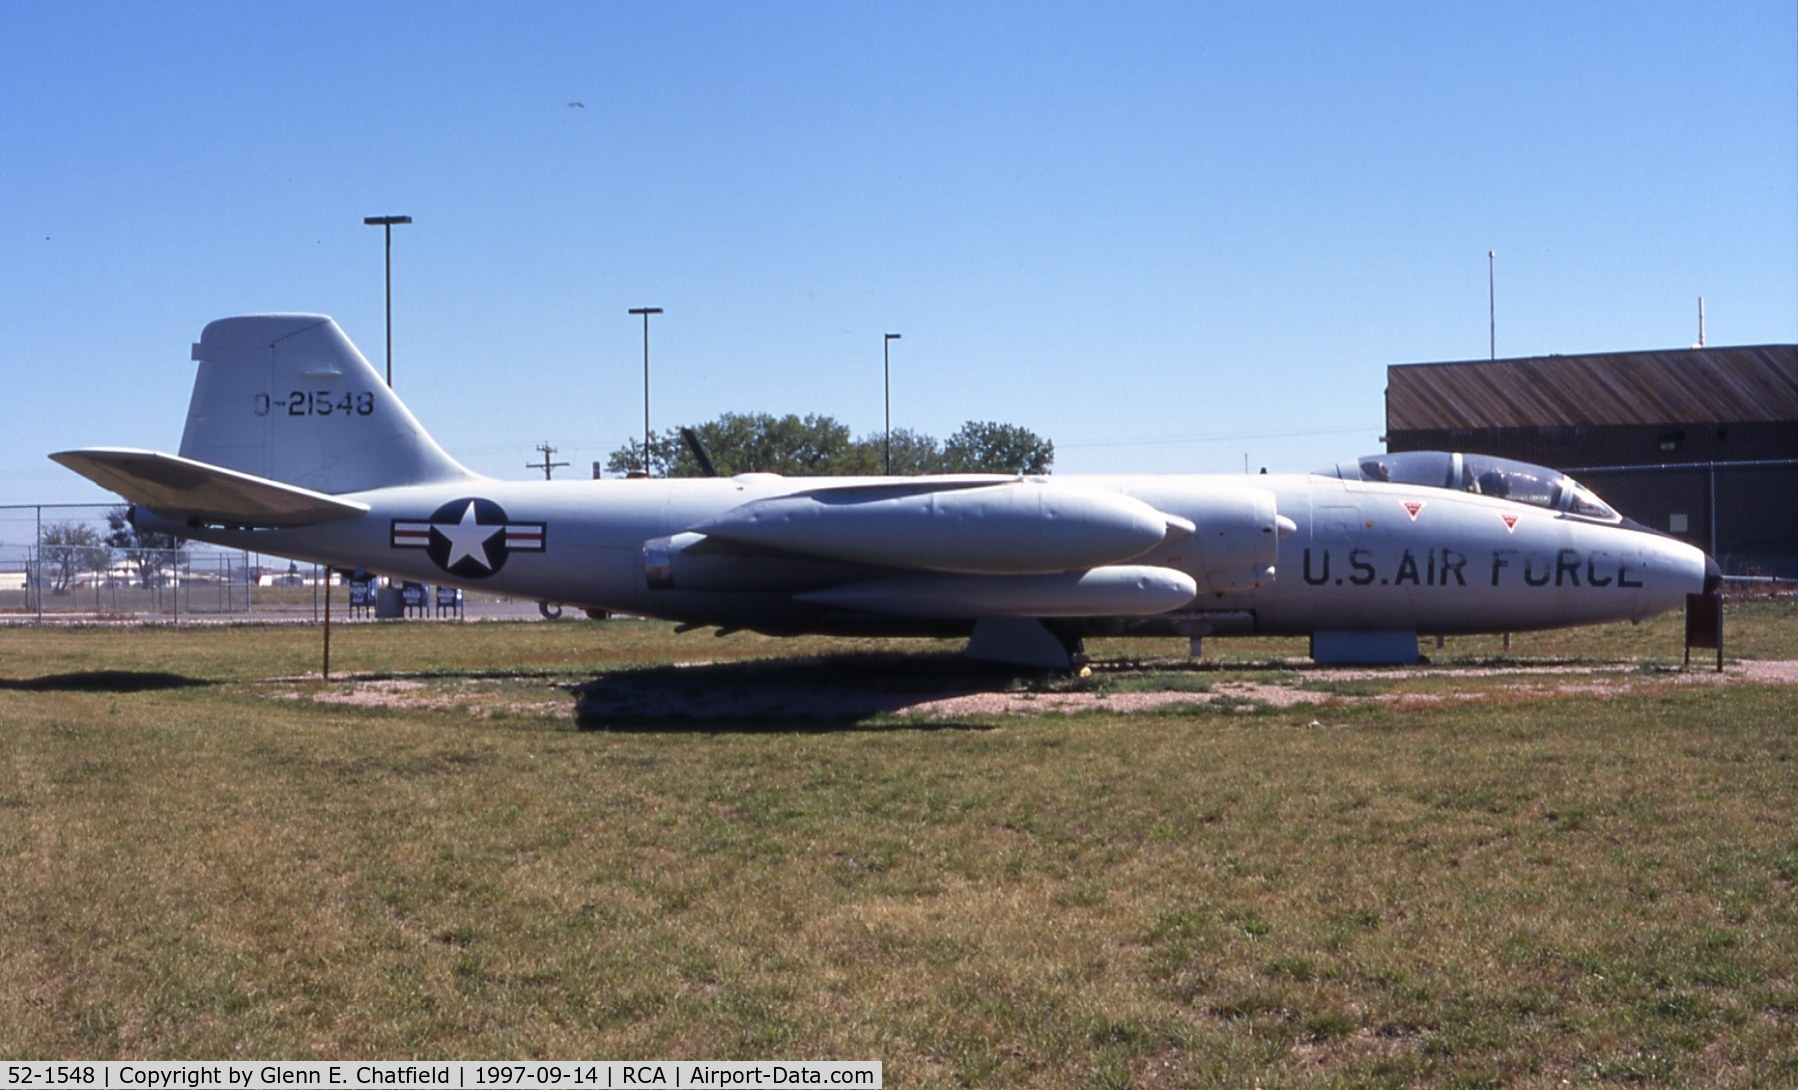 52-1548, 1952 Martin EB-57B Canberra C/N 131, EB-57B at the South Dakota Air & Space Museum